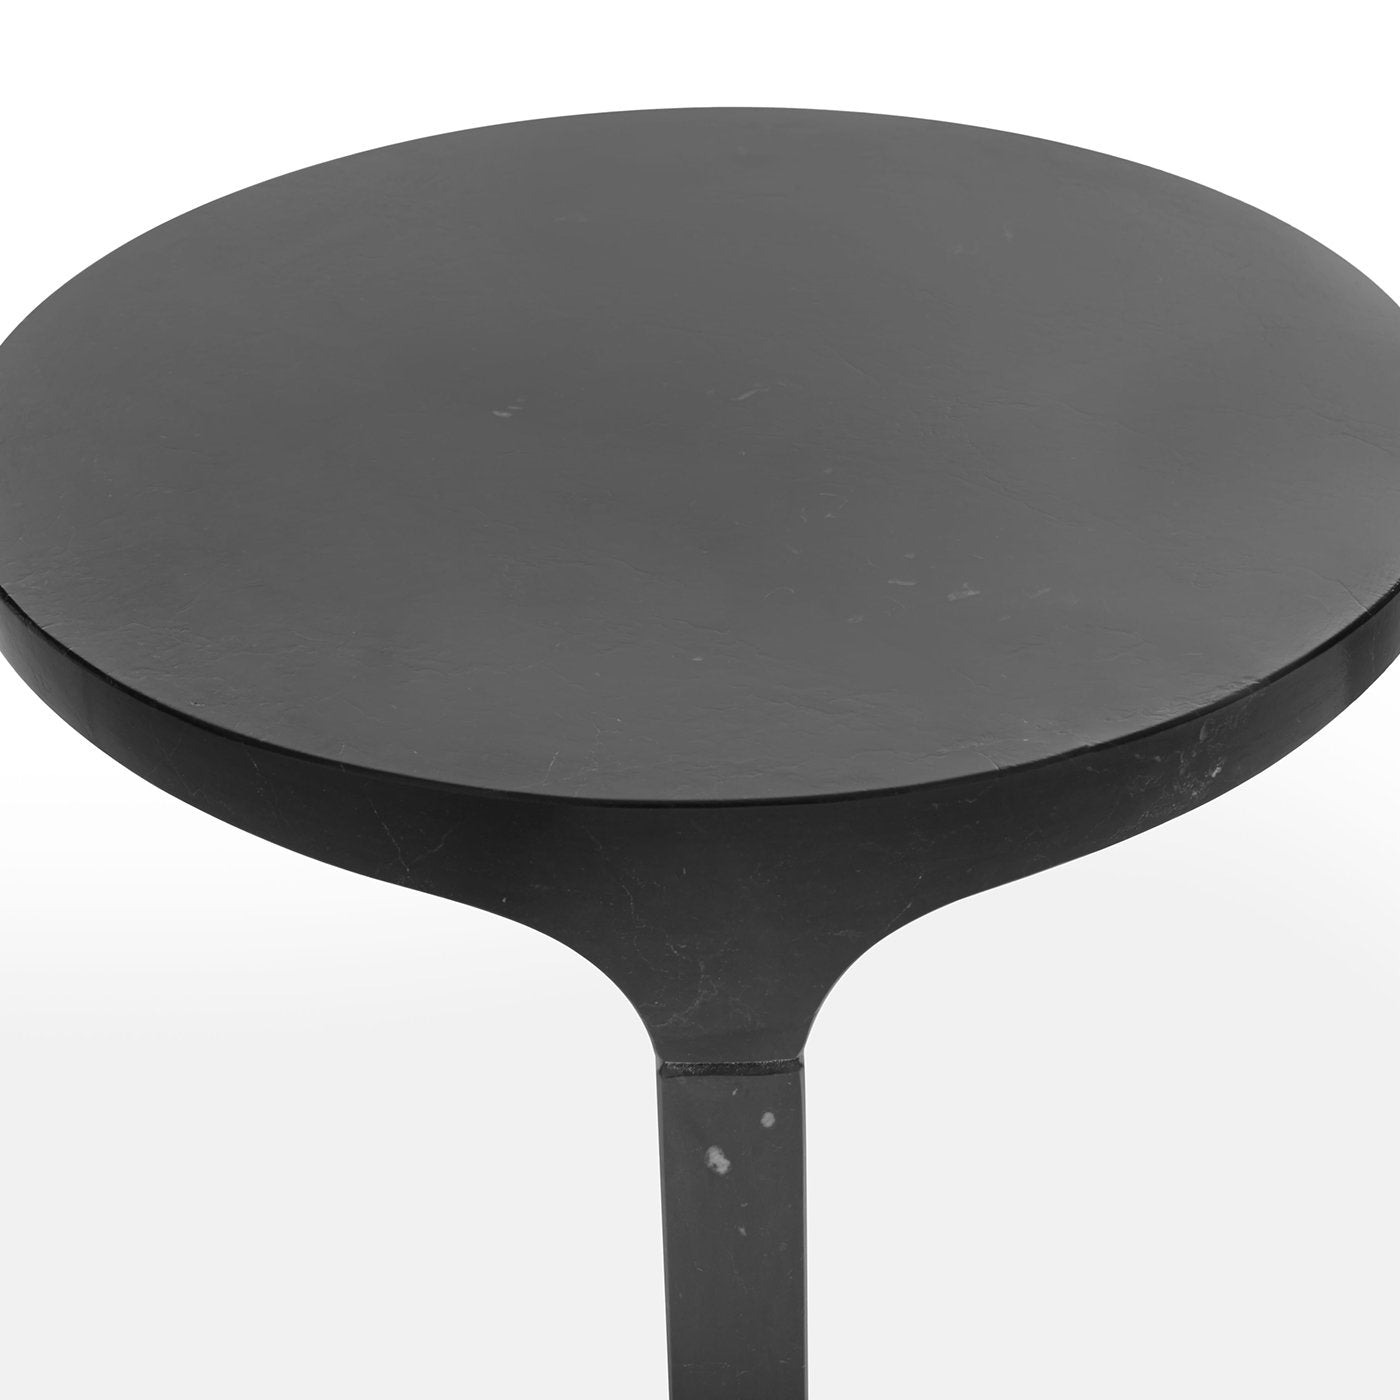 Black IPE TONDO SIDE TABLE - Design James Irvine 2009 - Alternative view 1